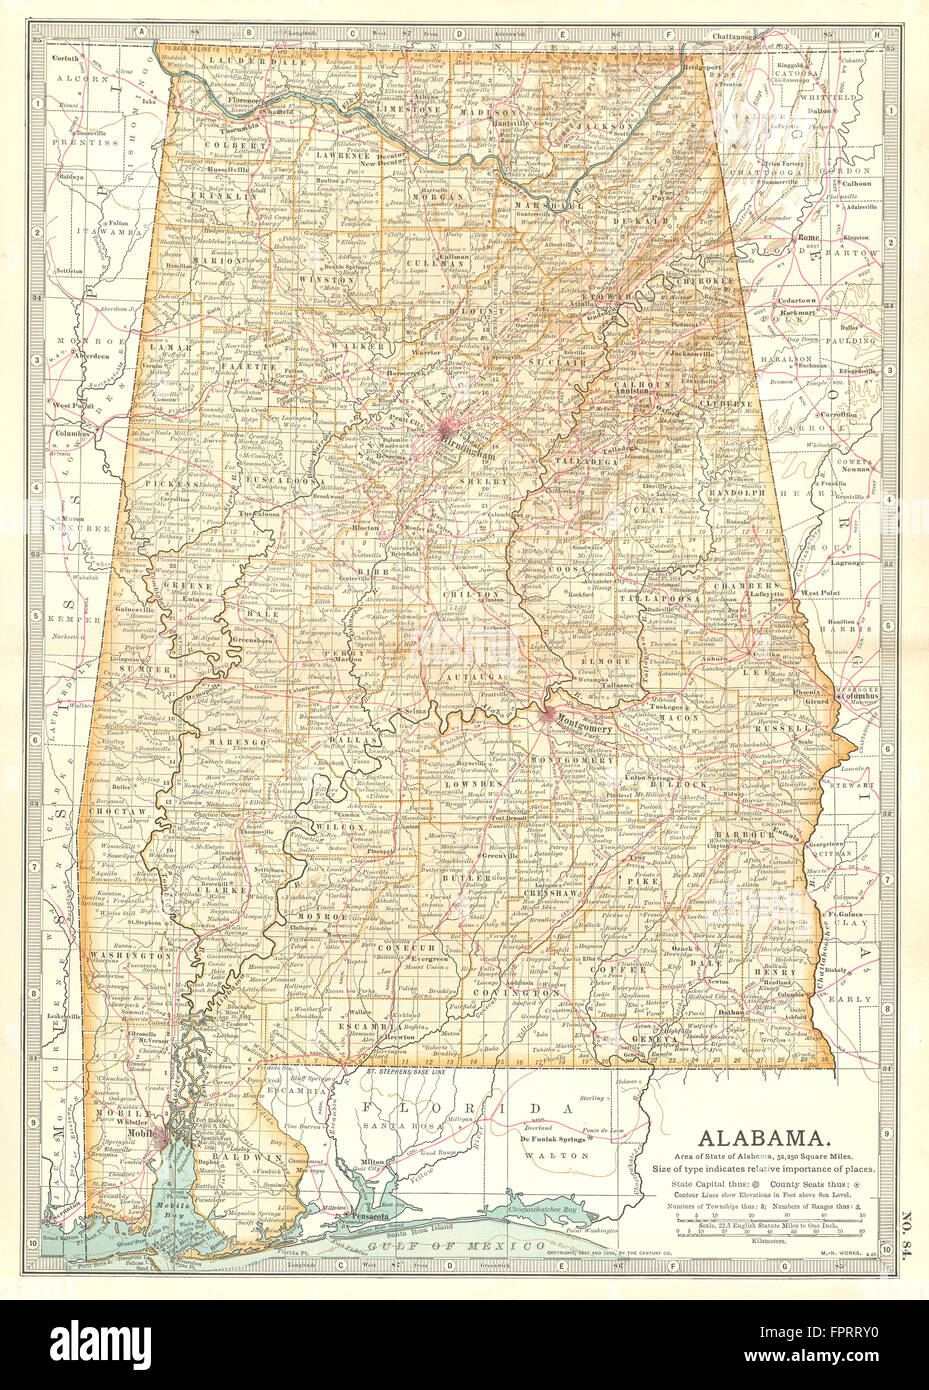 ALABAMA: State map. Counties. Shows civil war battlefields. Britannica, 1903 Stock Photo